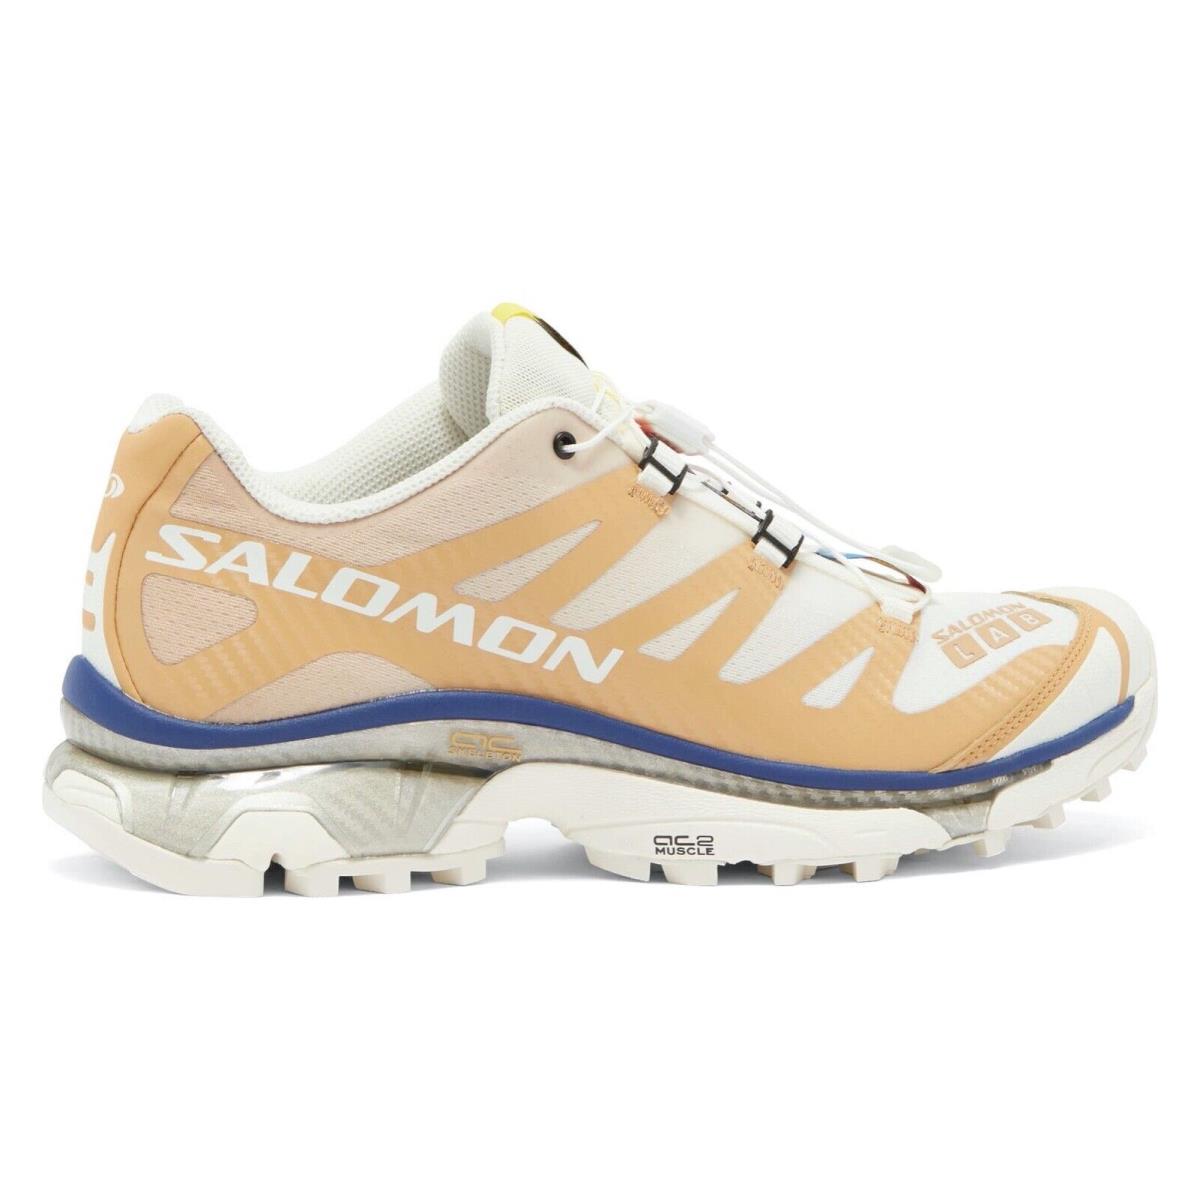 Salomon XT-4 OG Taffy Vanilla Ice Blue Print S/lab Trail Running Shoes Hiking